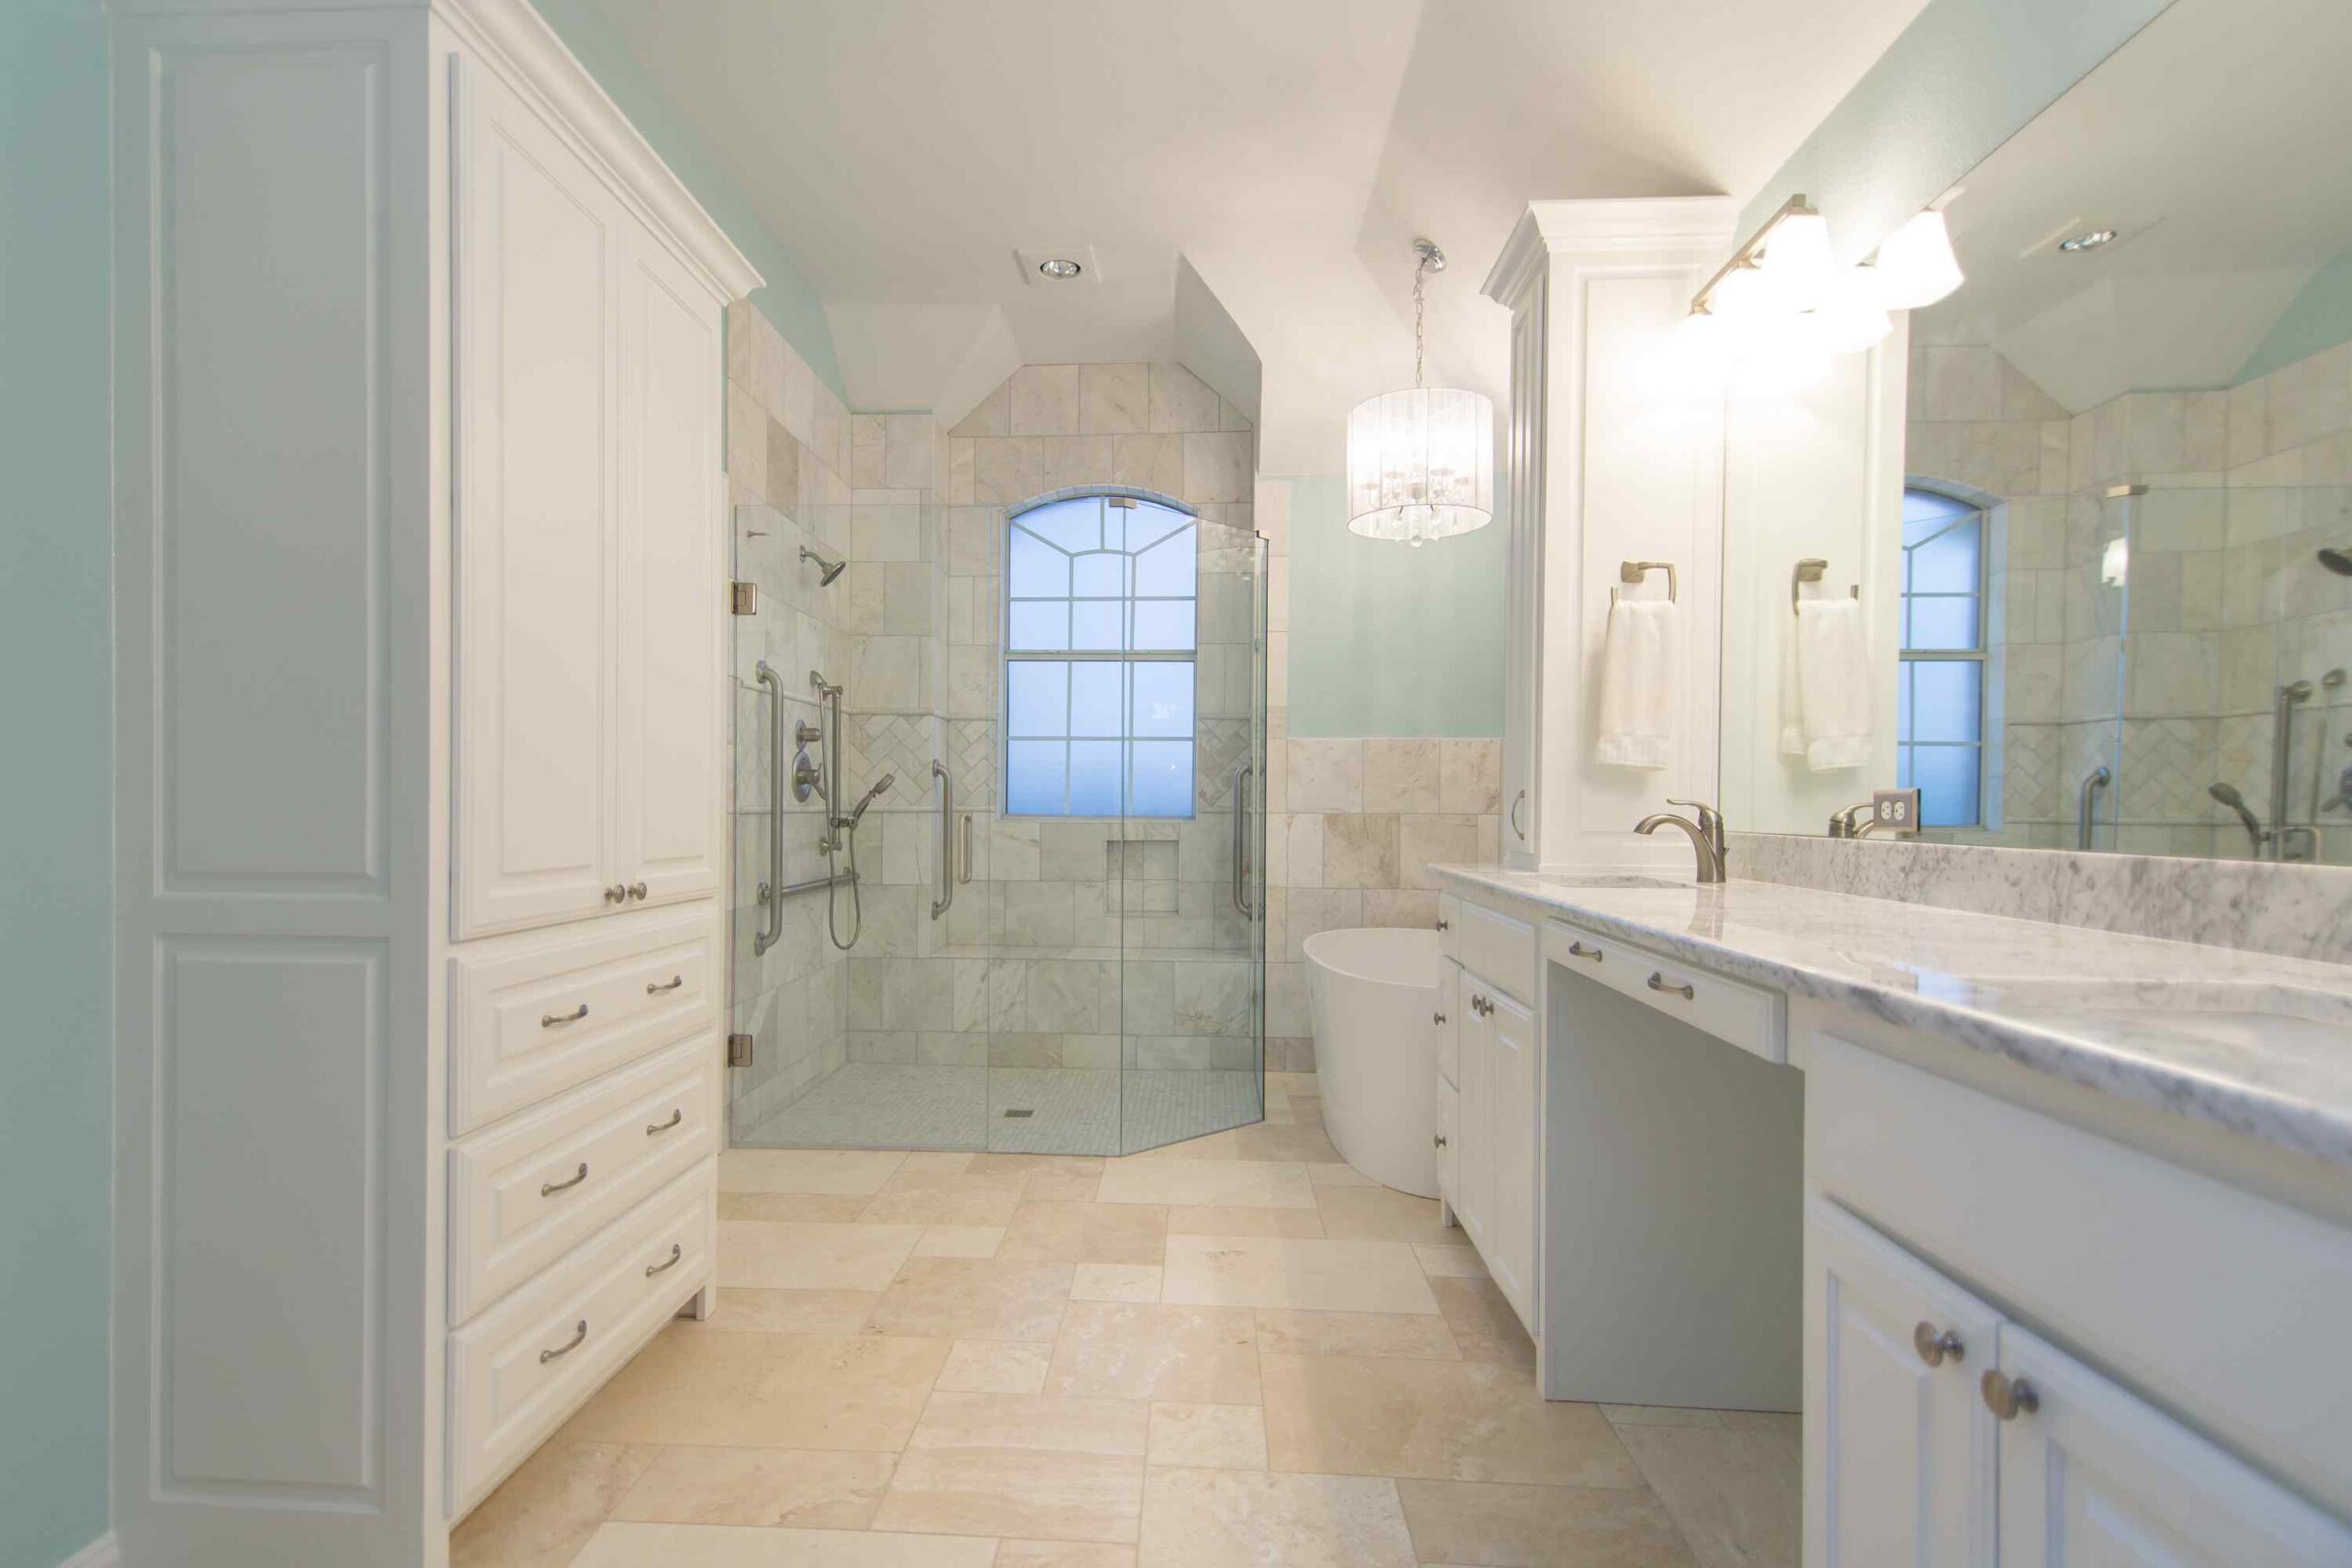 Modern Blu bathrooms marble floor - Also offering Basement Remodeling in Flower Mound TX